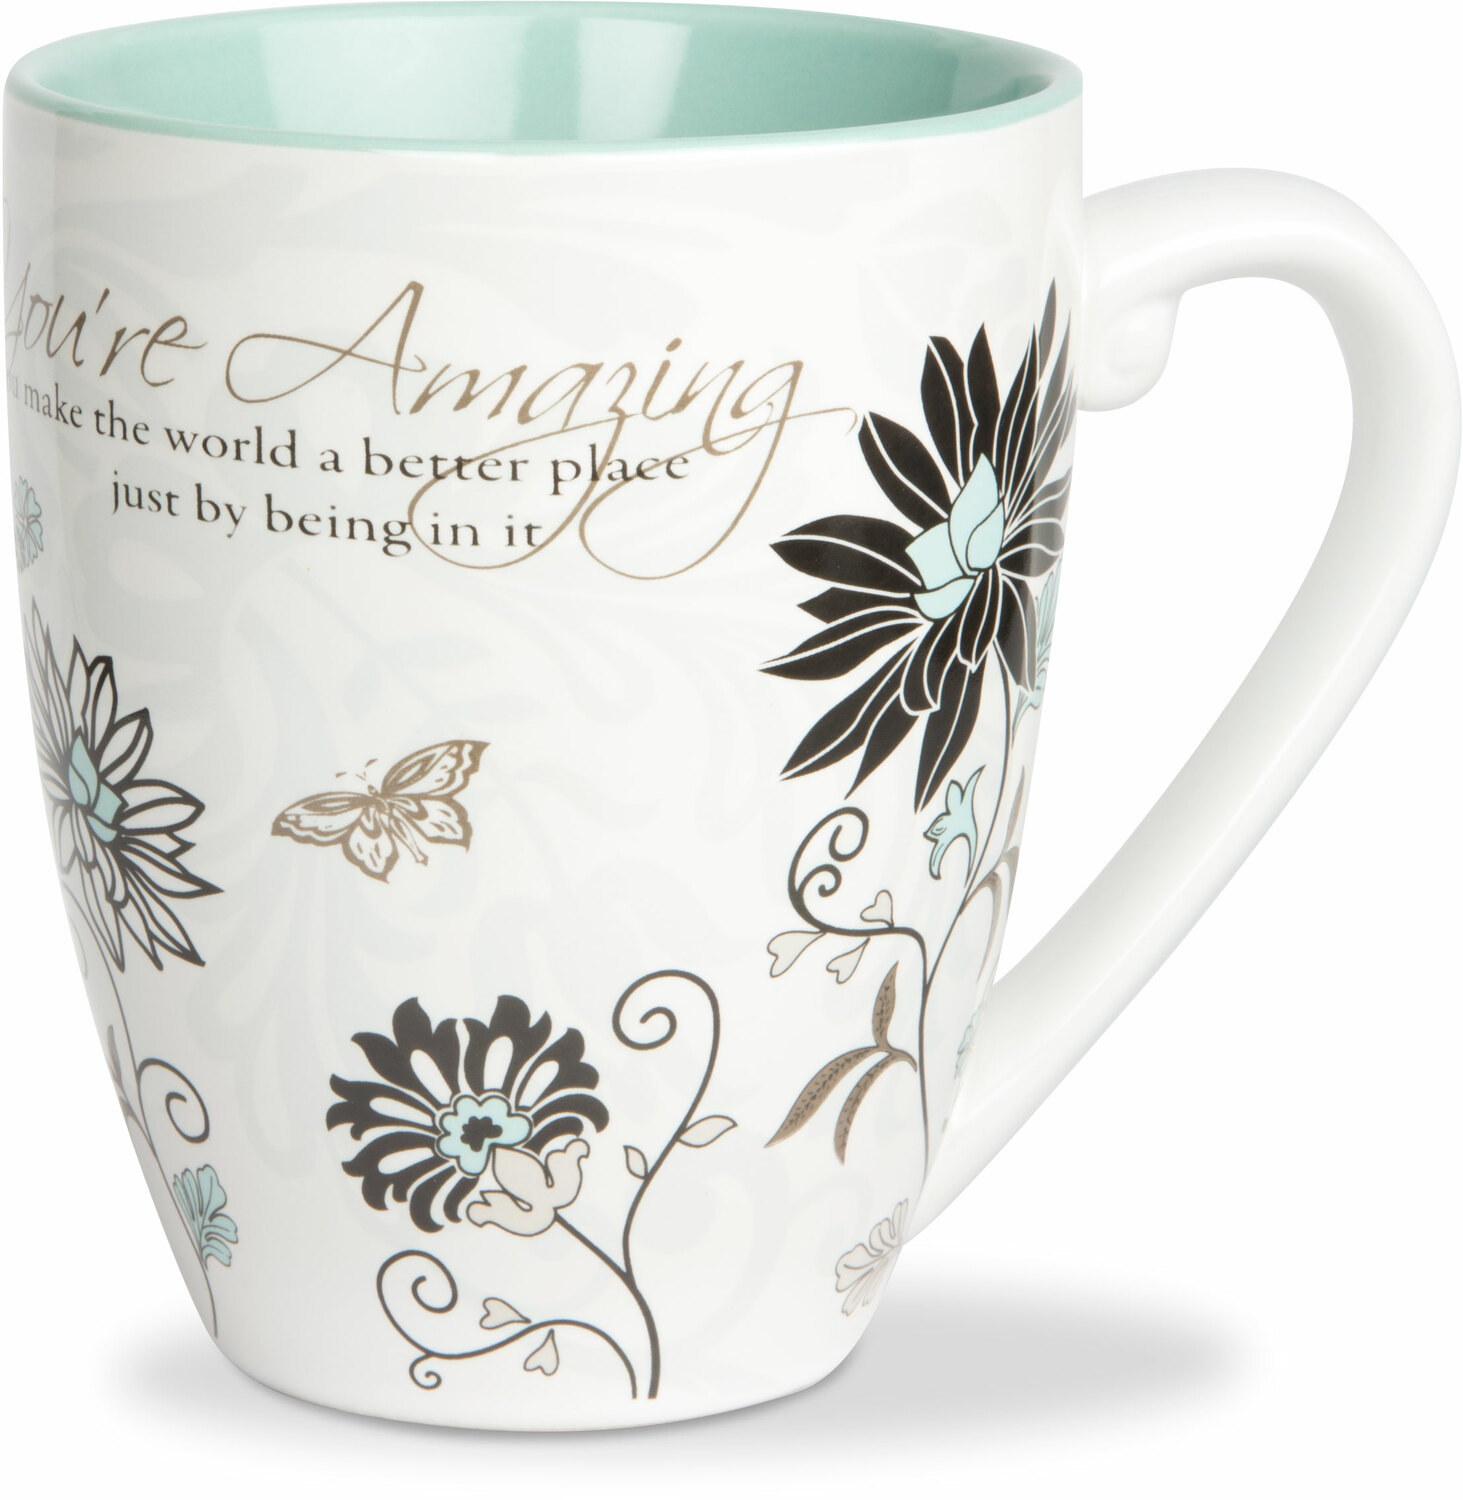 You're Amazing by Mark My Words - Large Flower Print Praise Coffee Mug, 20 oz